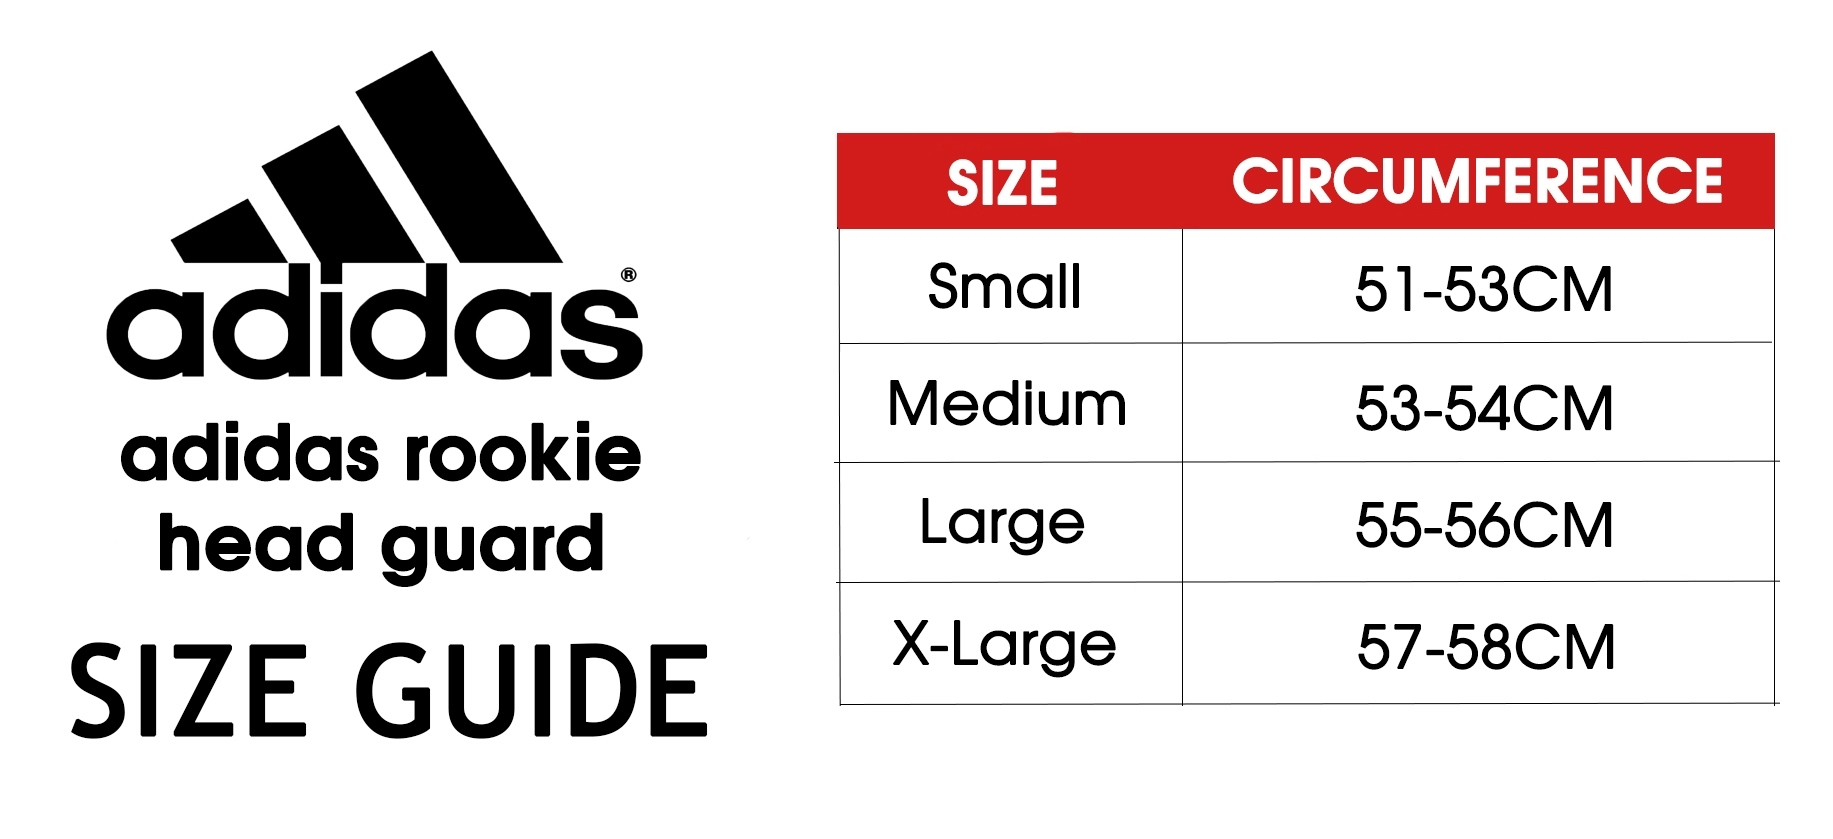 Adidas Rookie Headguard Size Guide